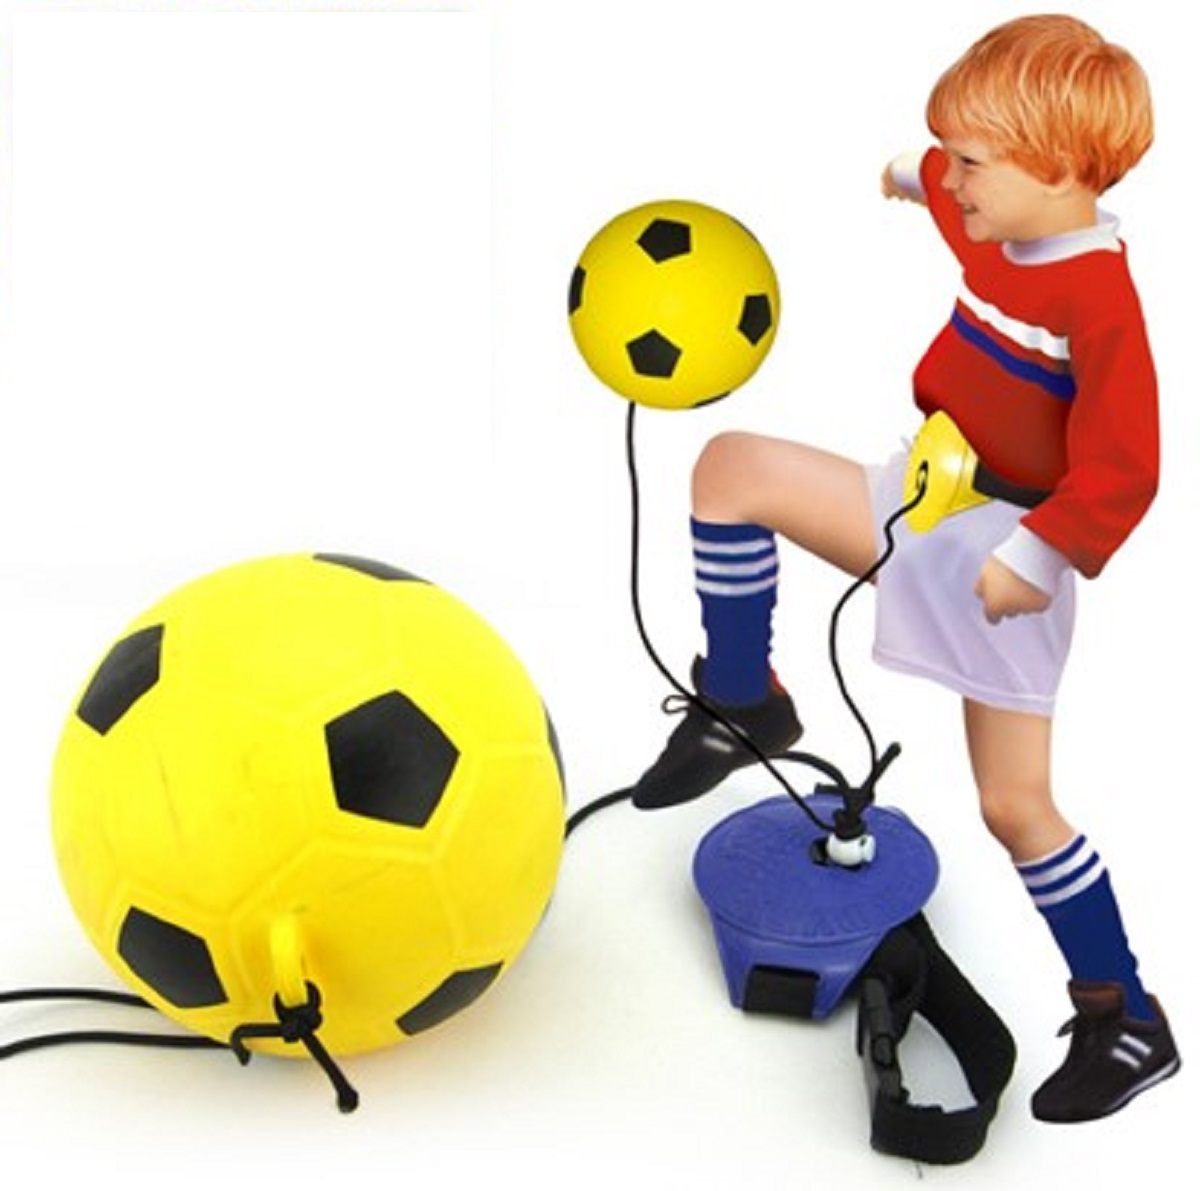  soccer lifting training belt . ball . attaching convenience 